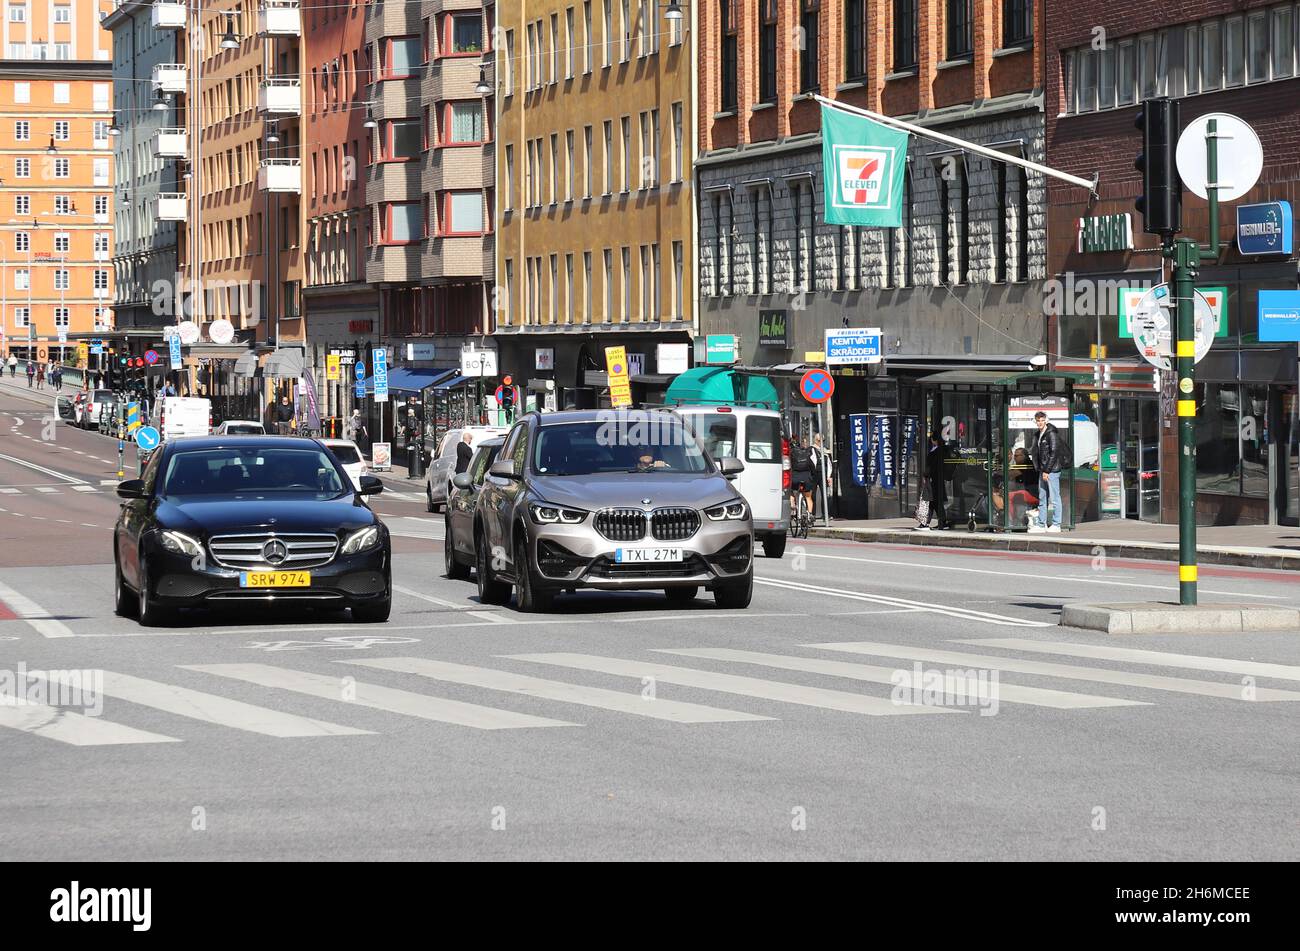 Stockholm, Sweden - September 2, 2021: Street view of the Sankt Eriksgatan street in the Kungsholmen district. Stock Photo